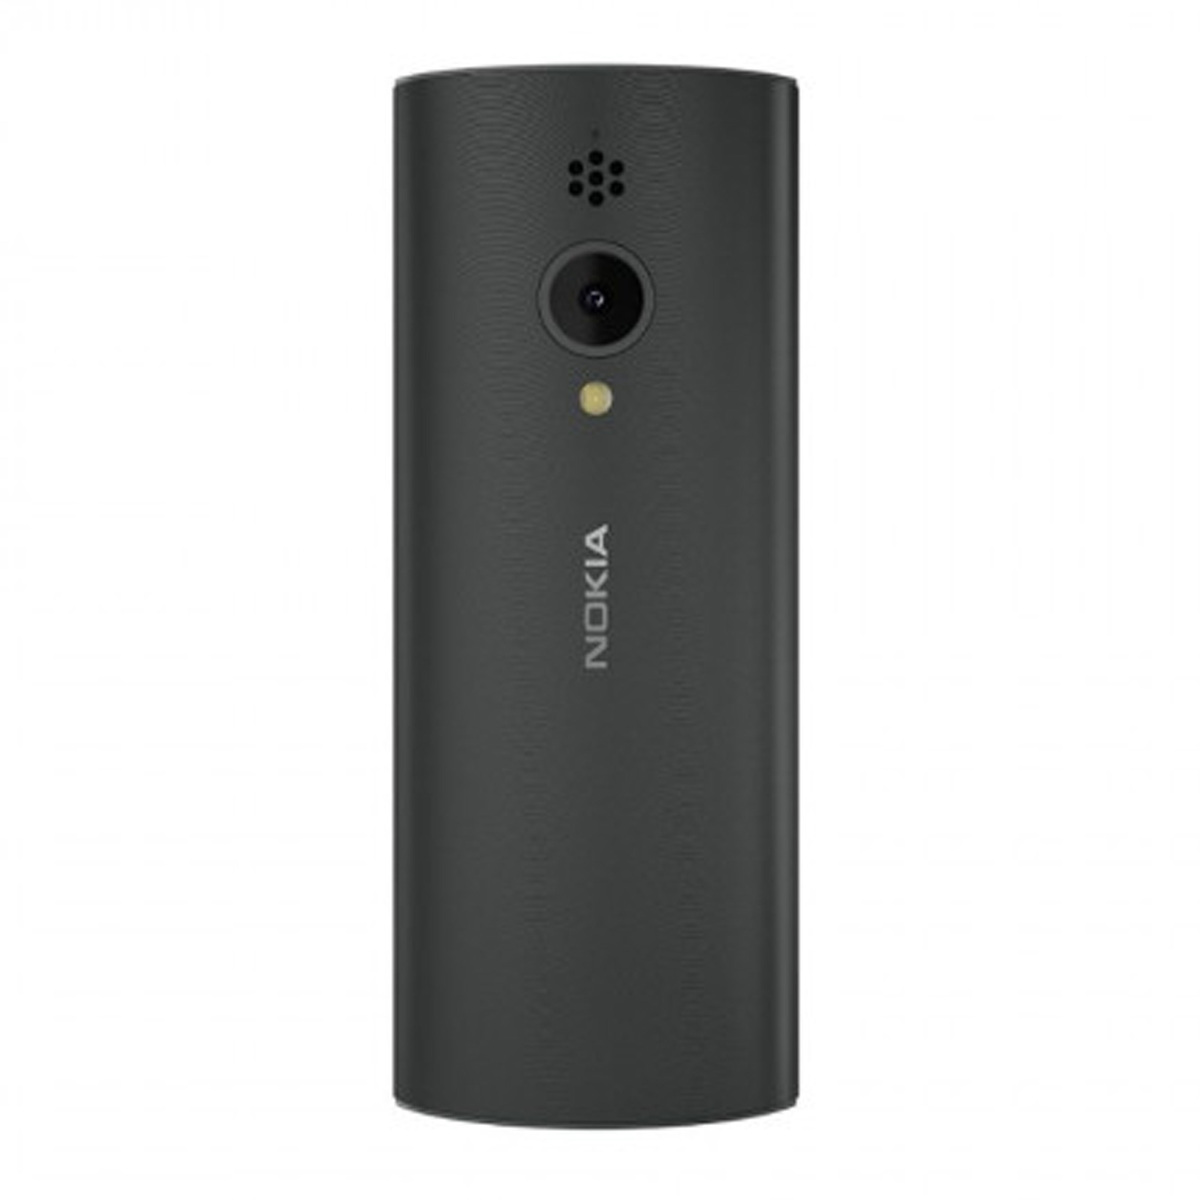 Nokia 150 Dual Sim Feature Phone, Black, TA1582